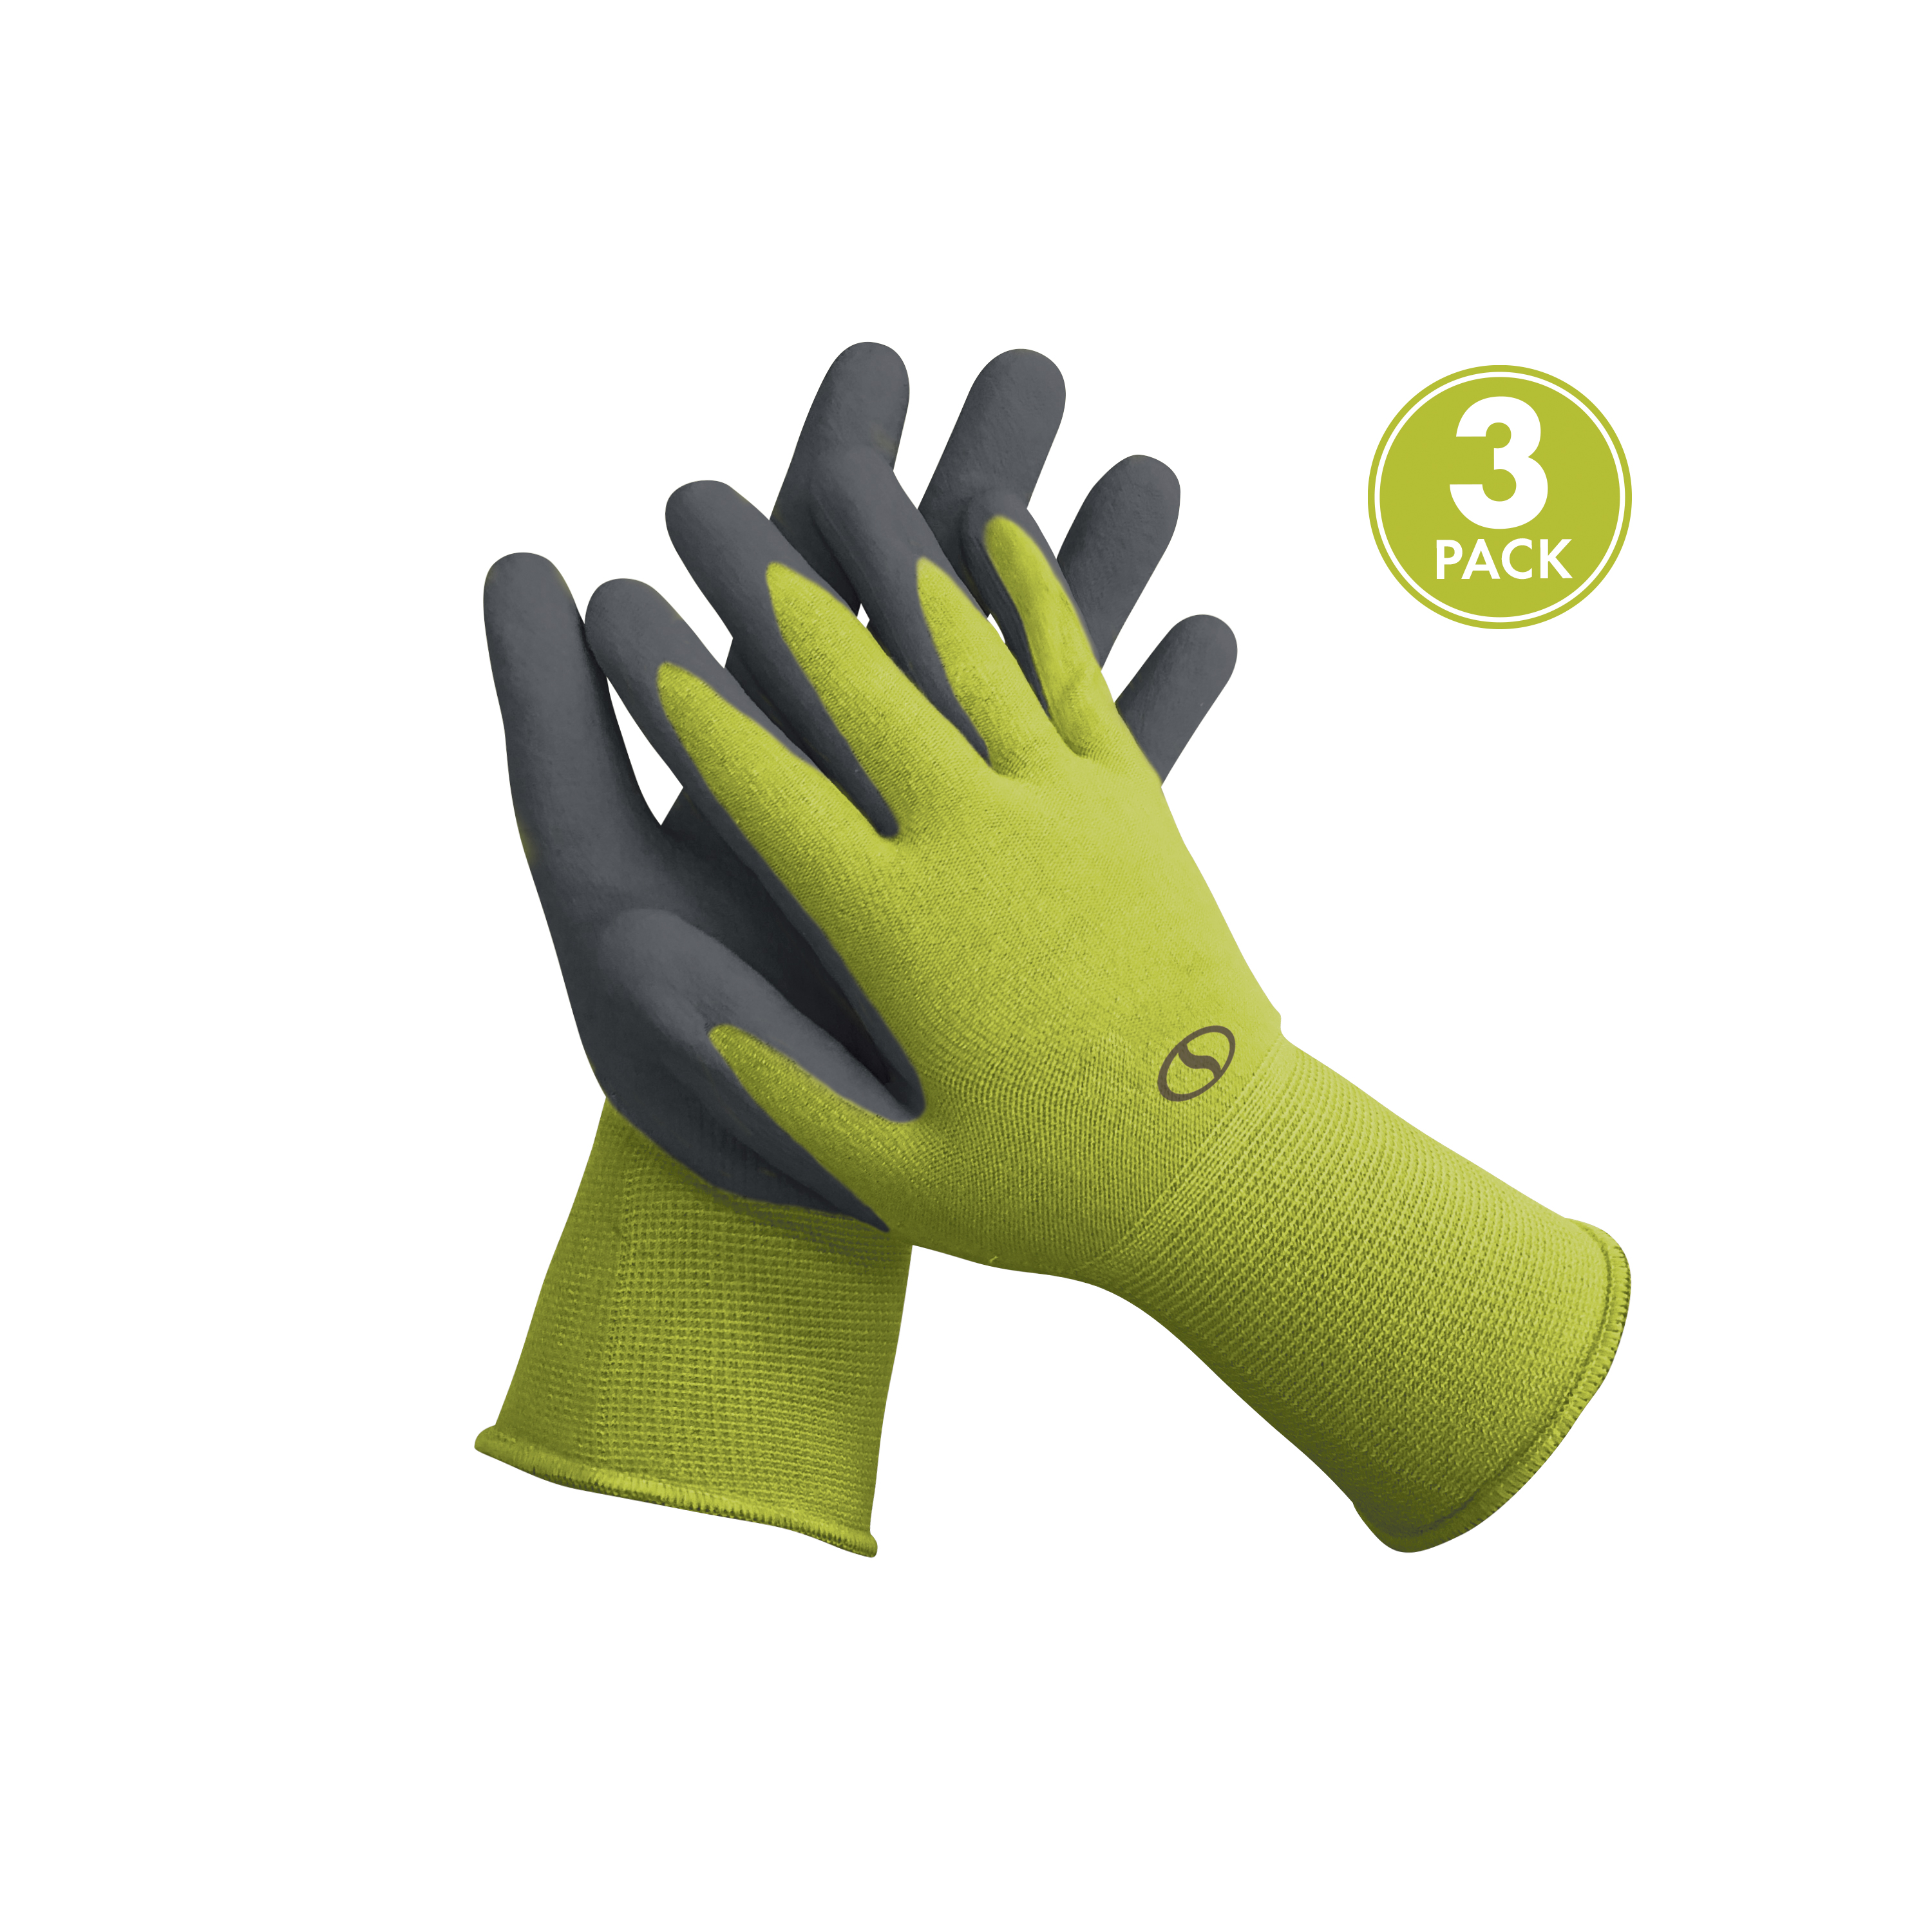 washable nitrile gloves